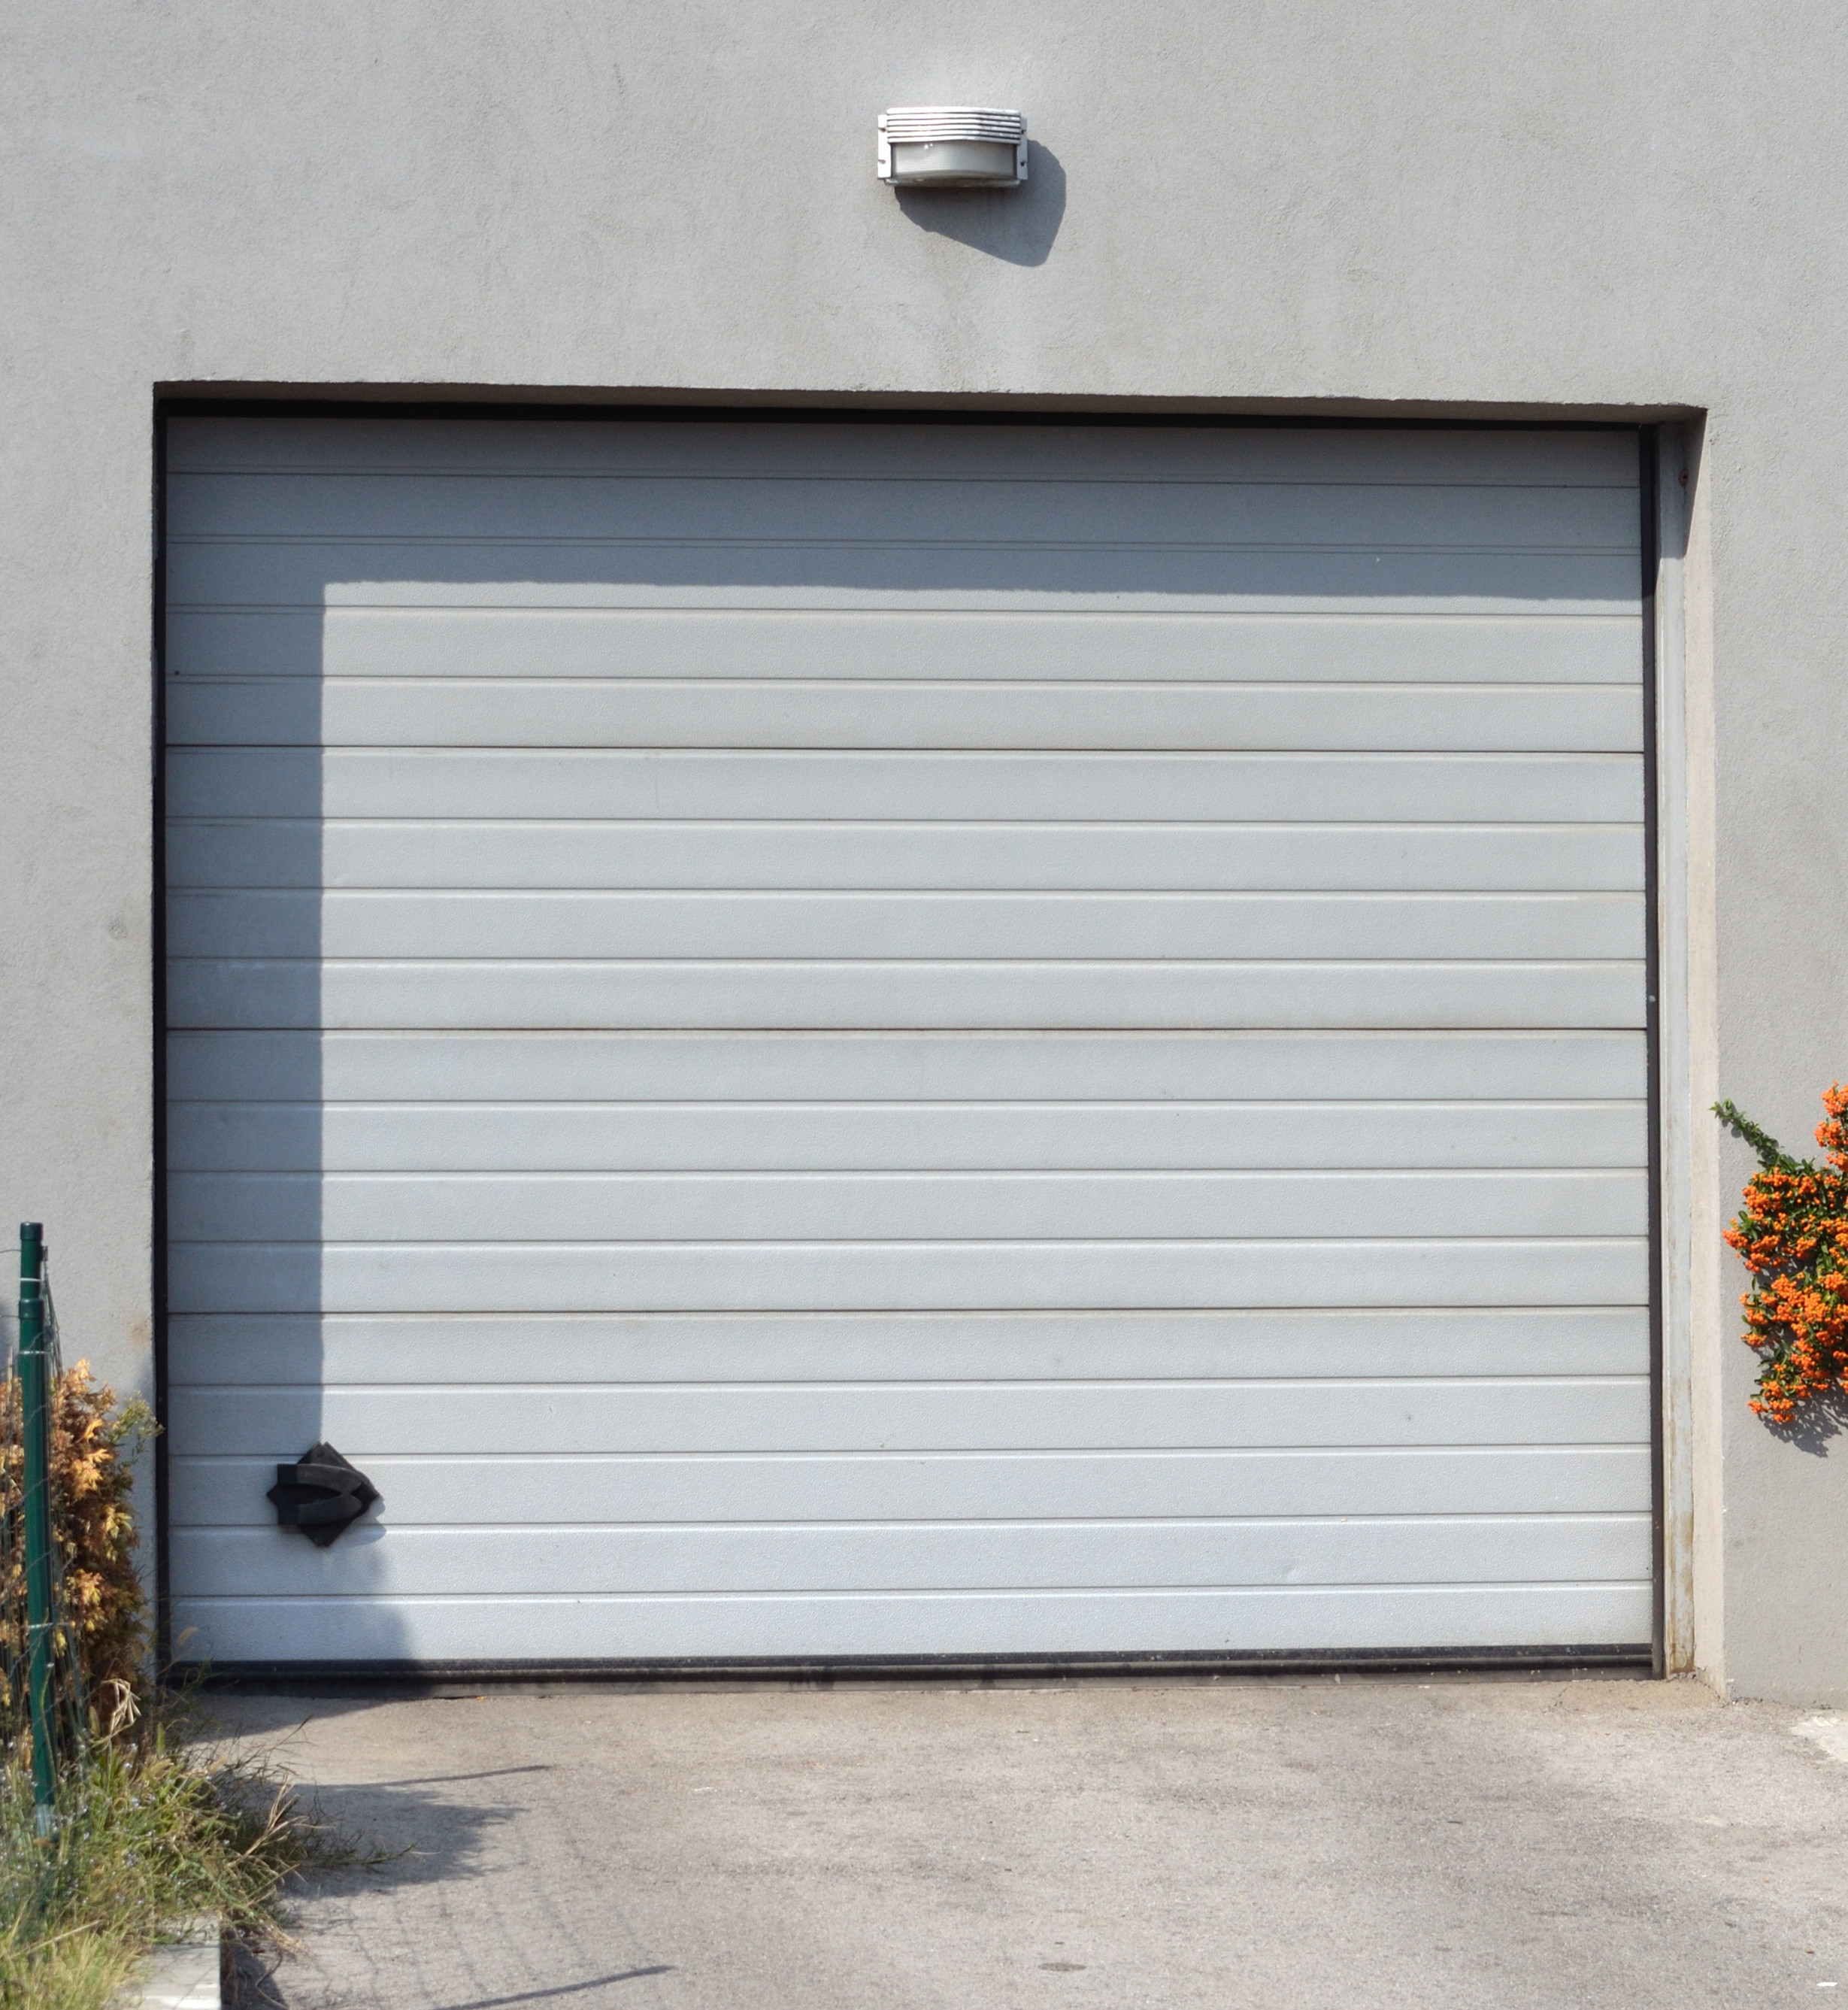 Best ideas about Garage Door Maintenance DIY . Save or Pin DIY Garage Door Maintenance Now.